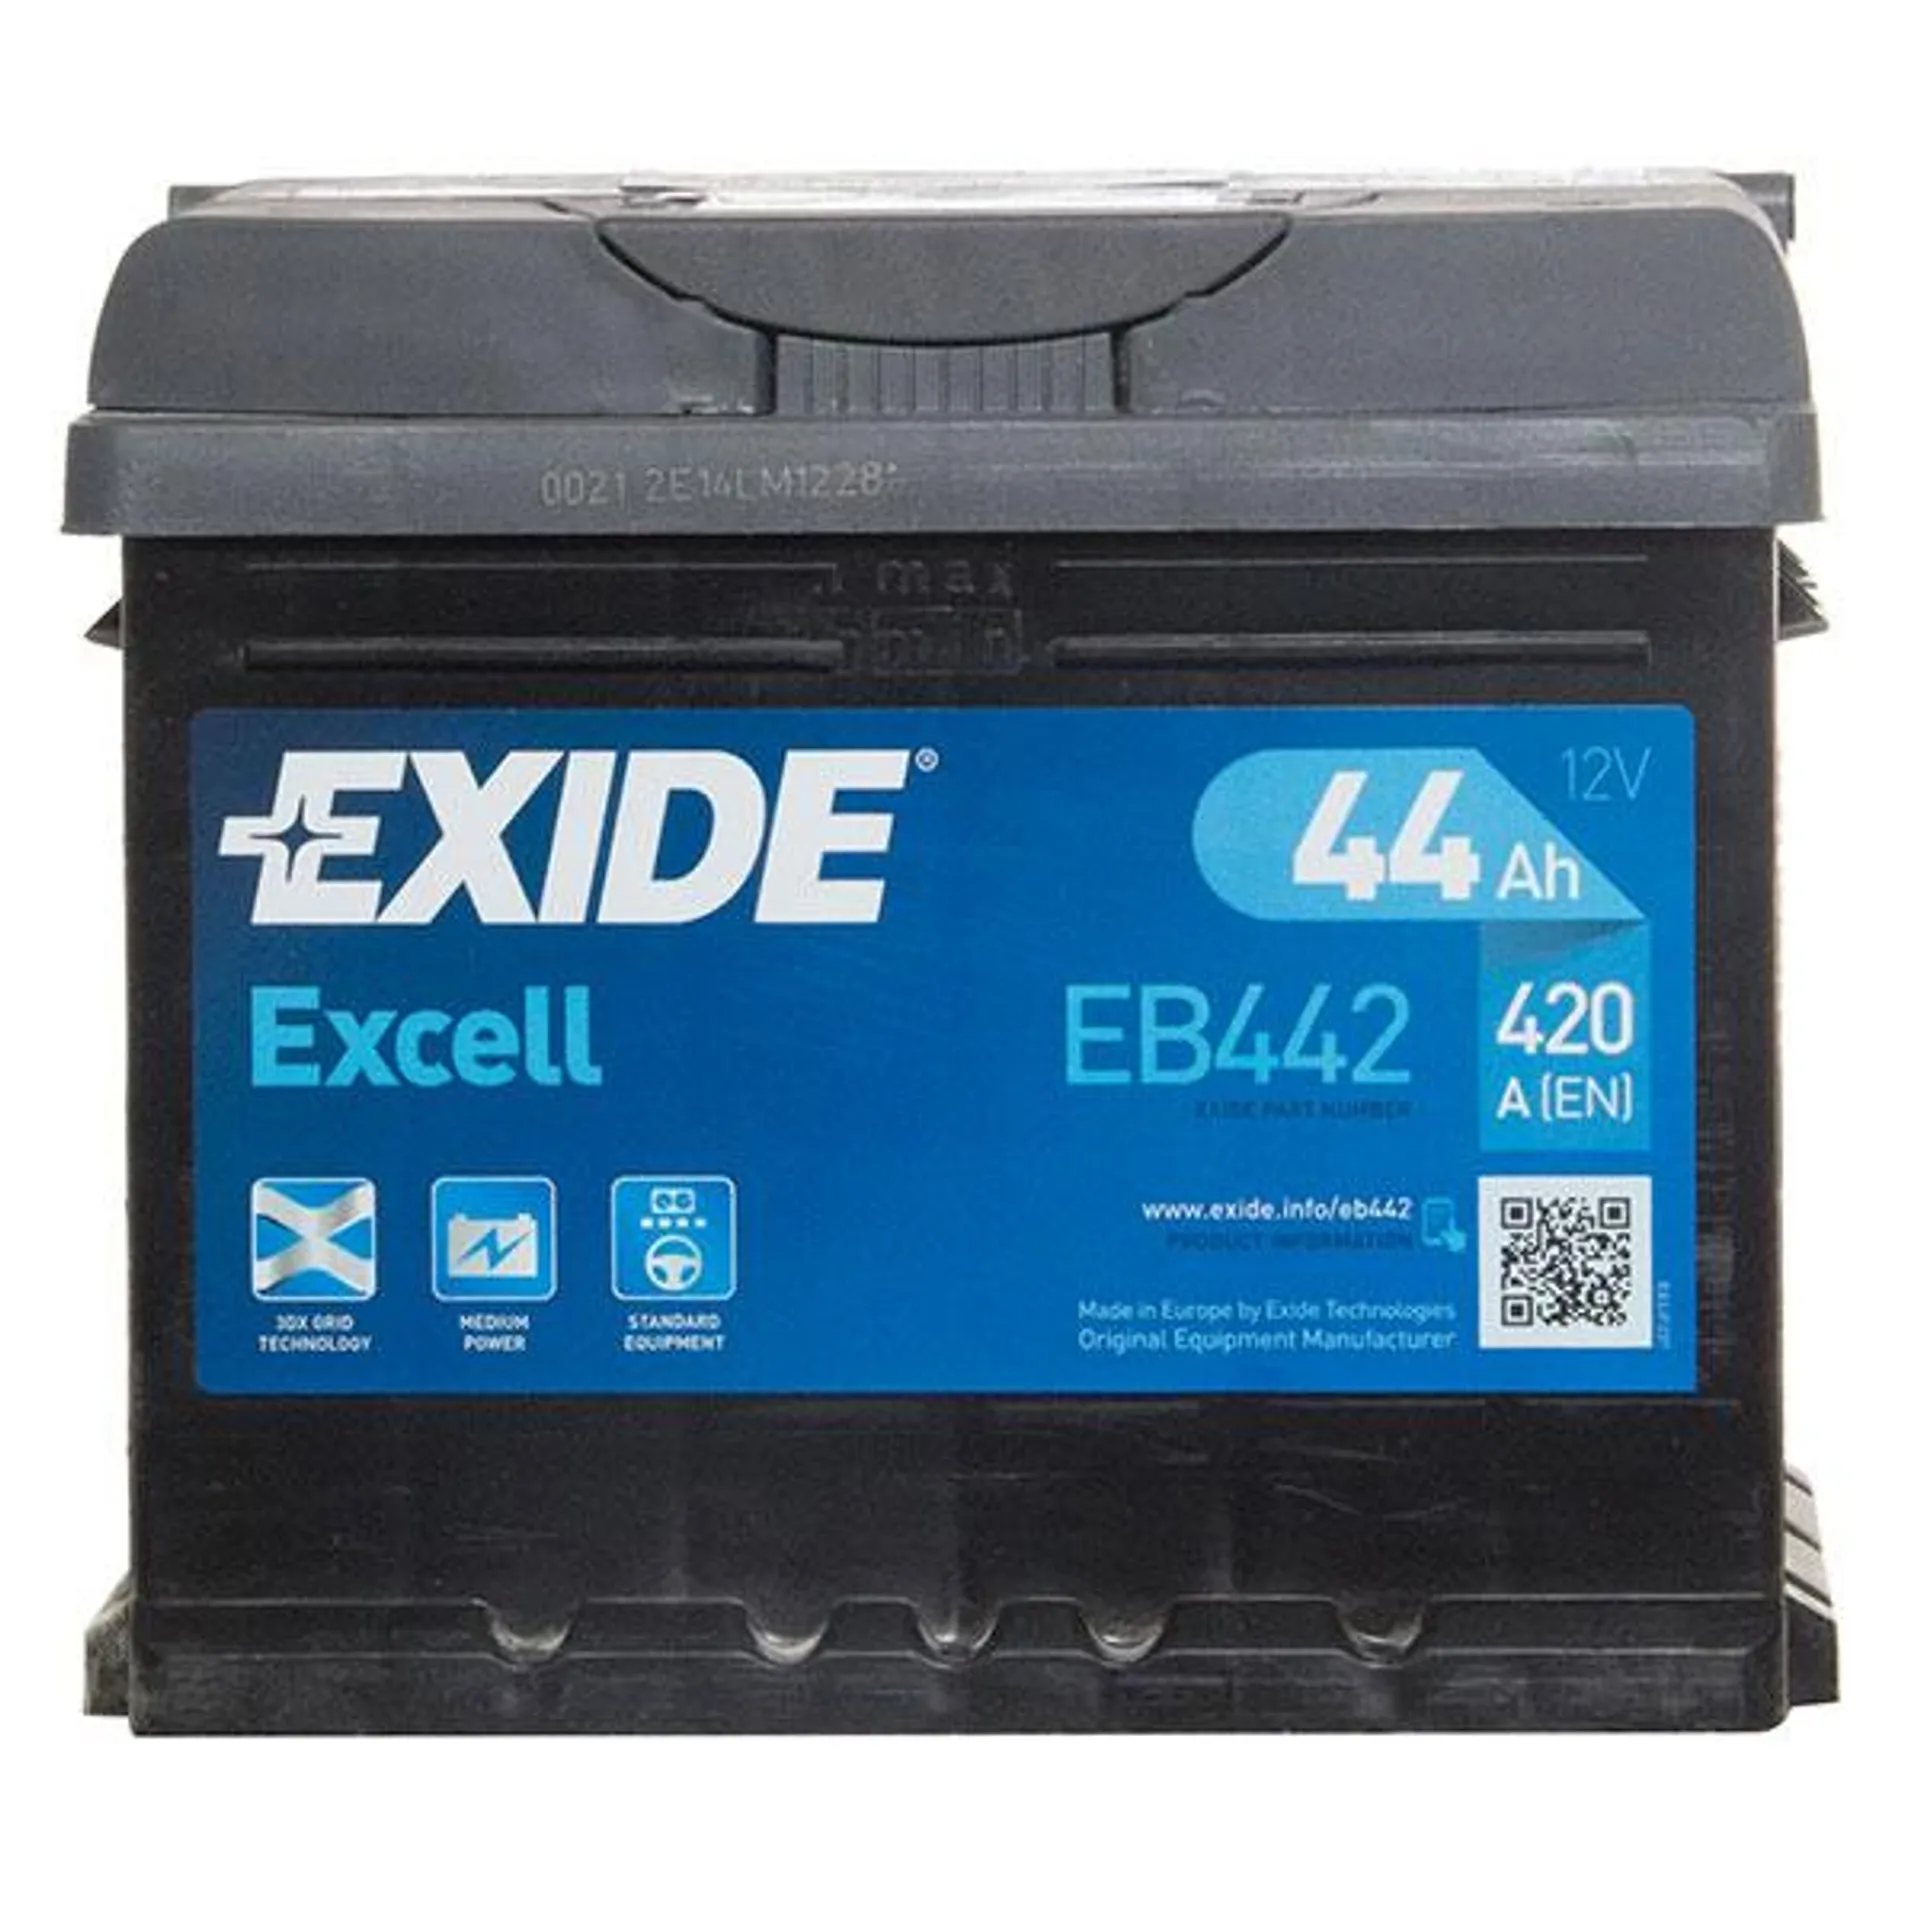 Exide Excel 063 Car Battery - 3 Year Guarantee